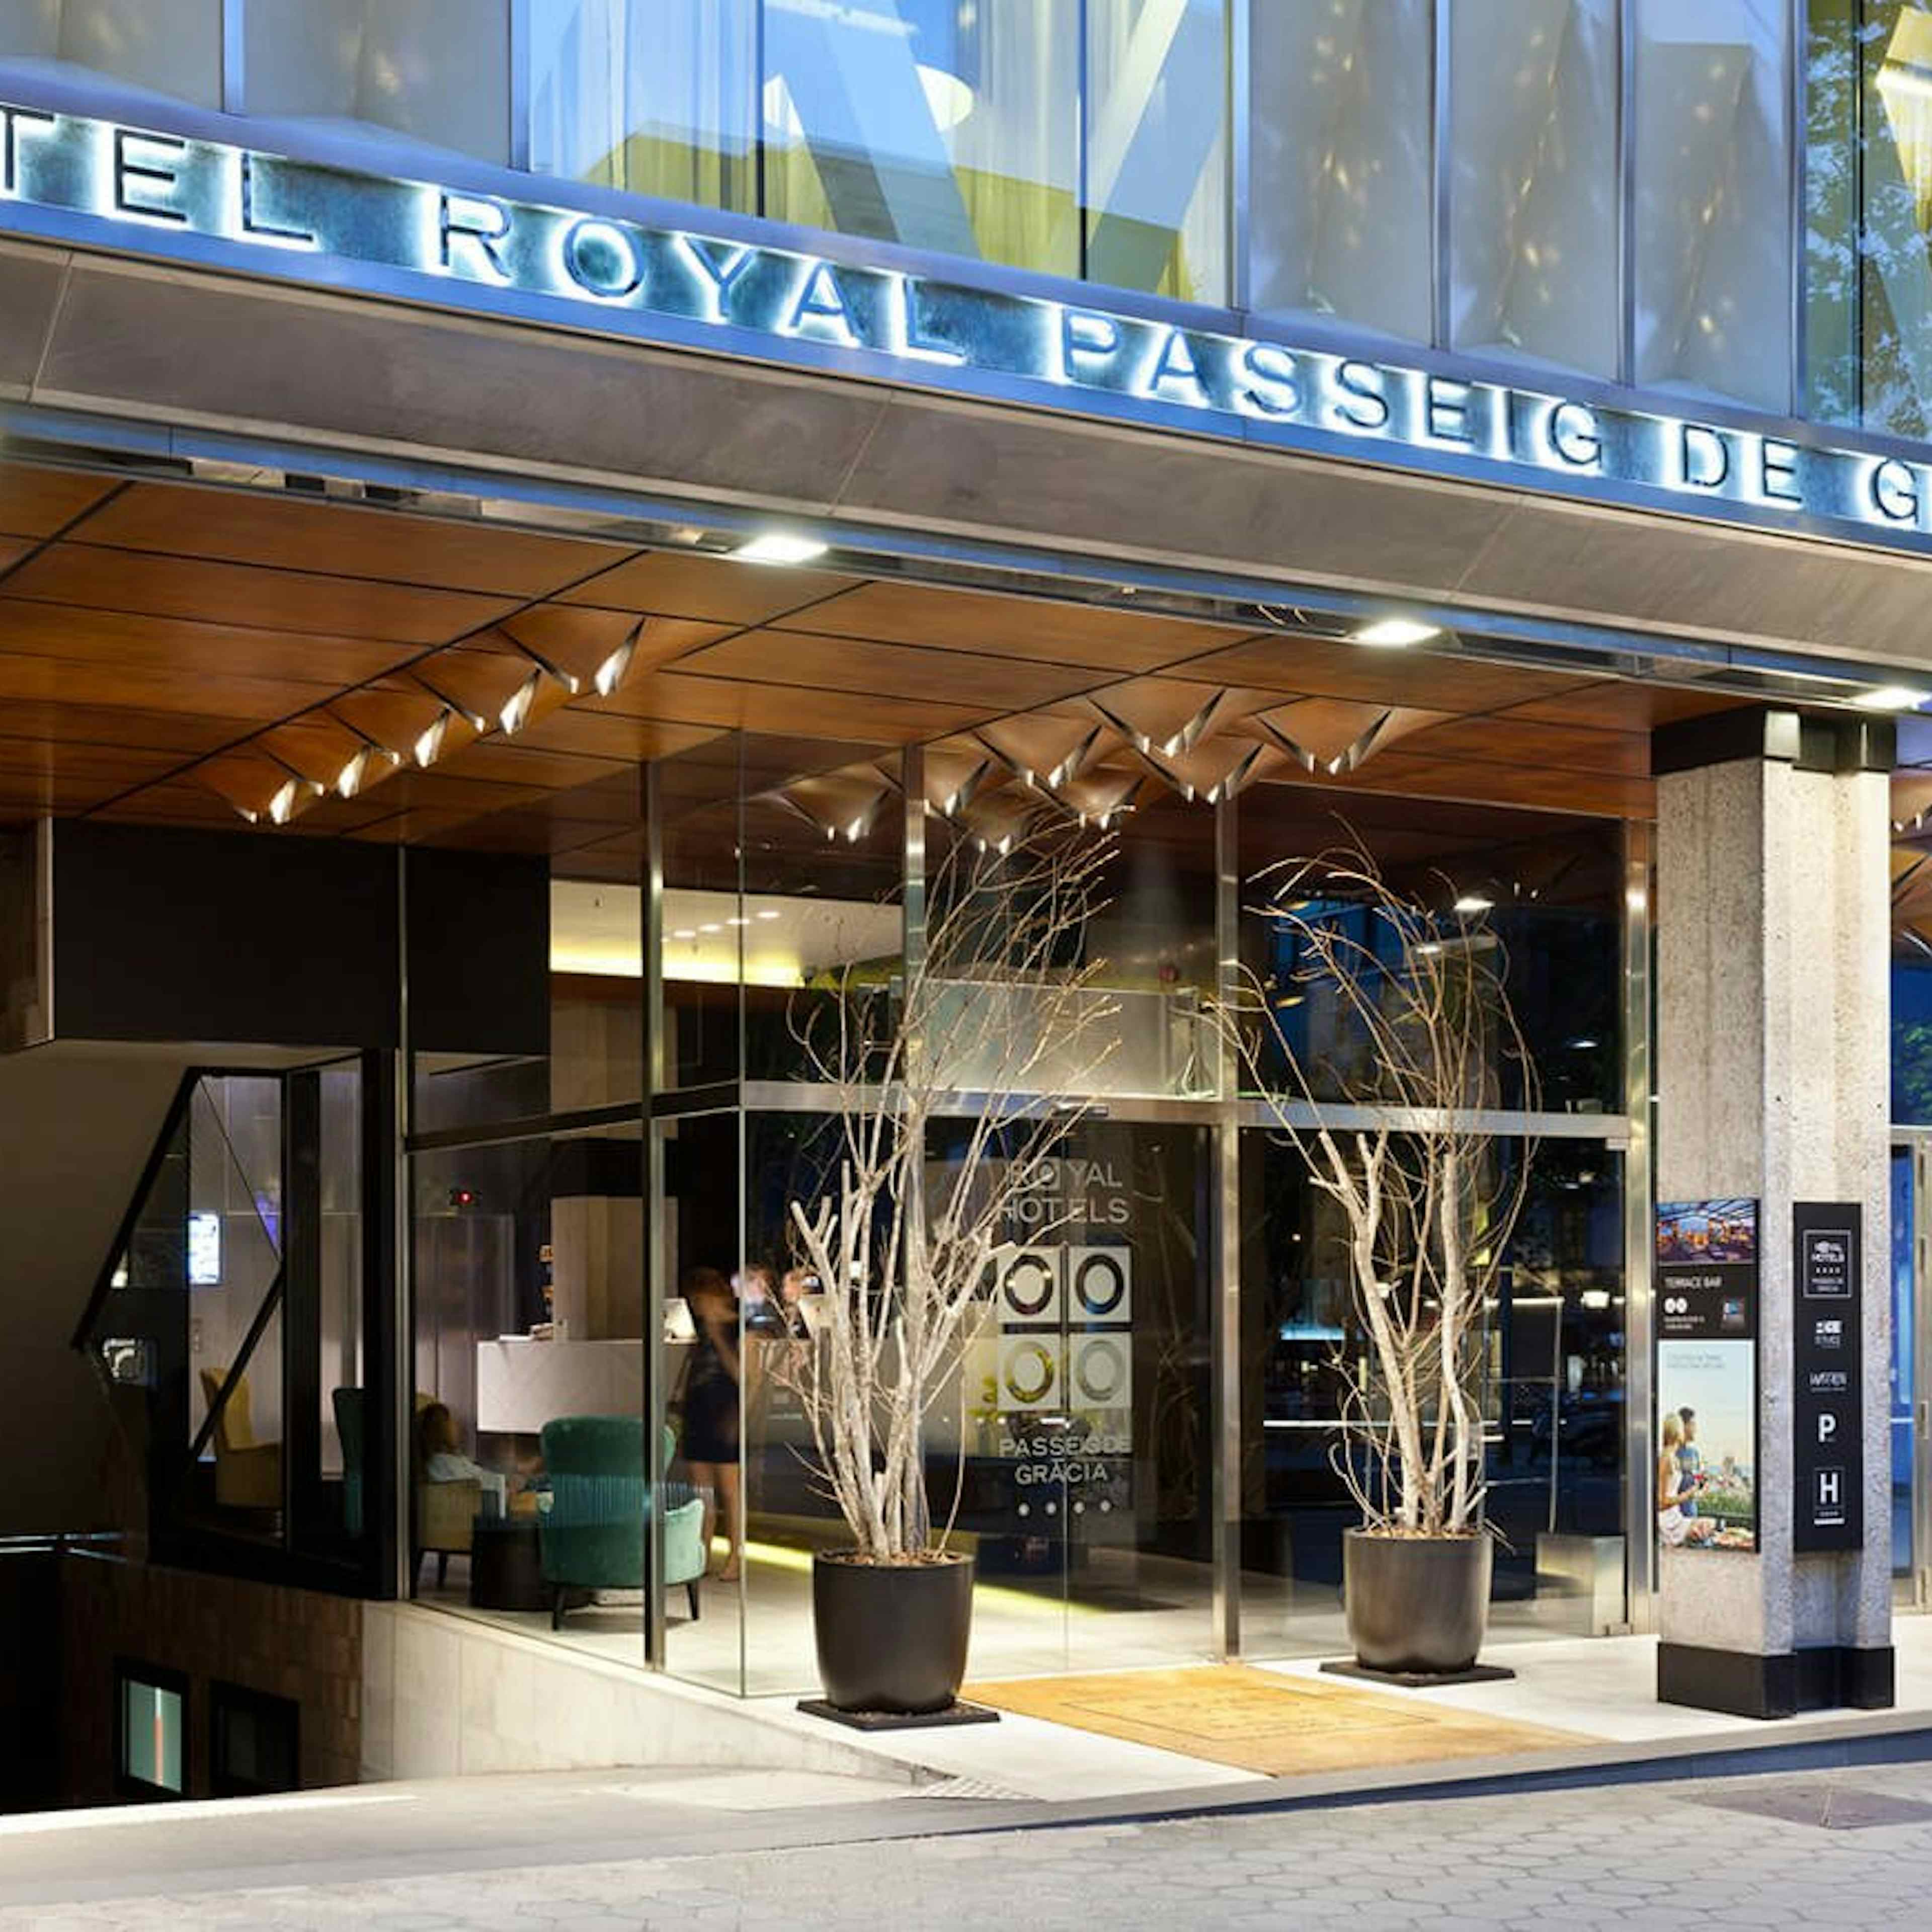 Royal Passeig de Gracia Hotel - Meeting Rooms-Terrace 83.3 image 3